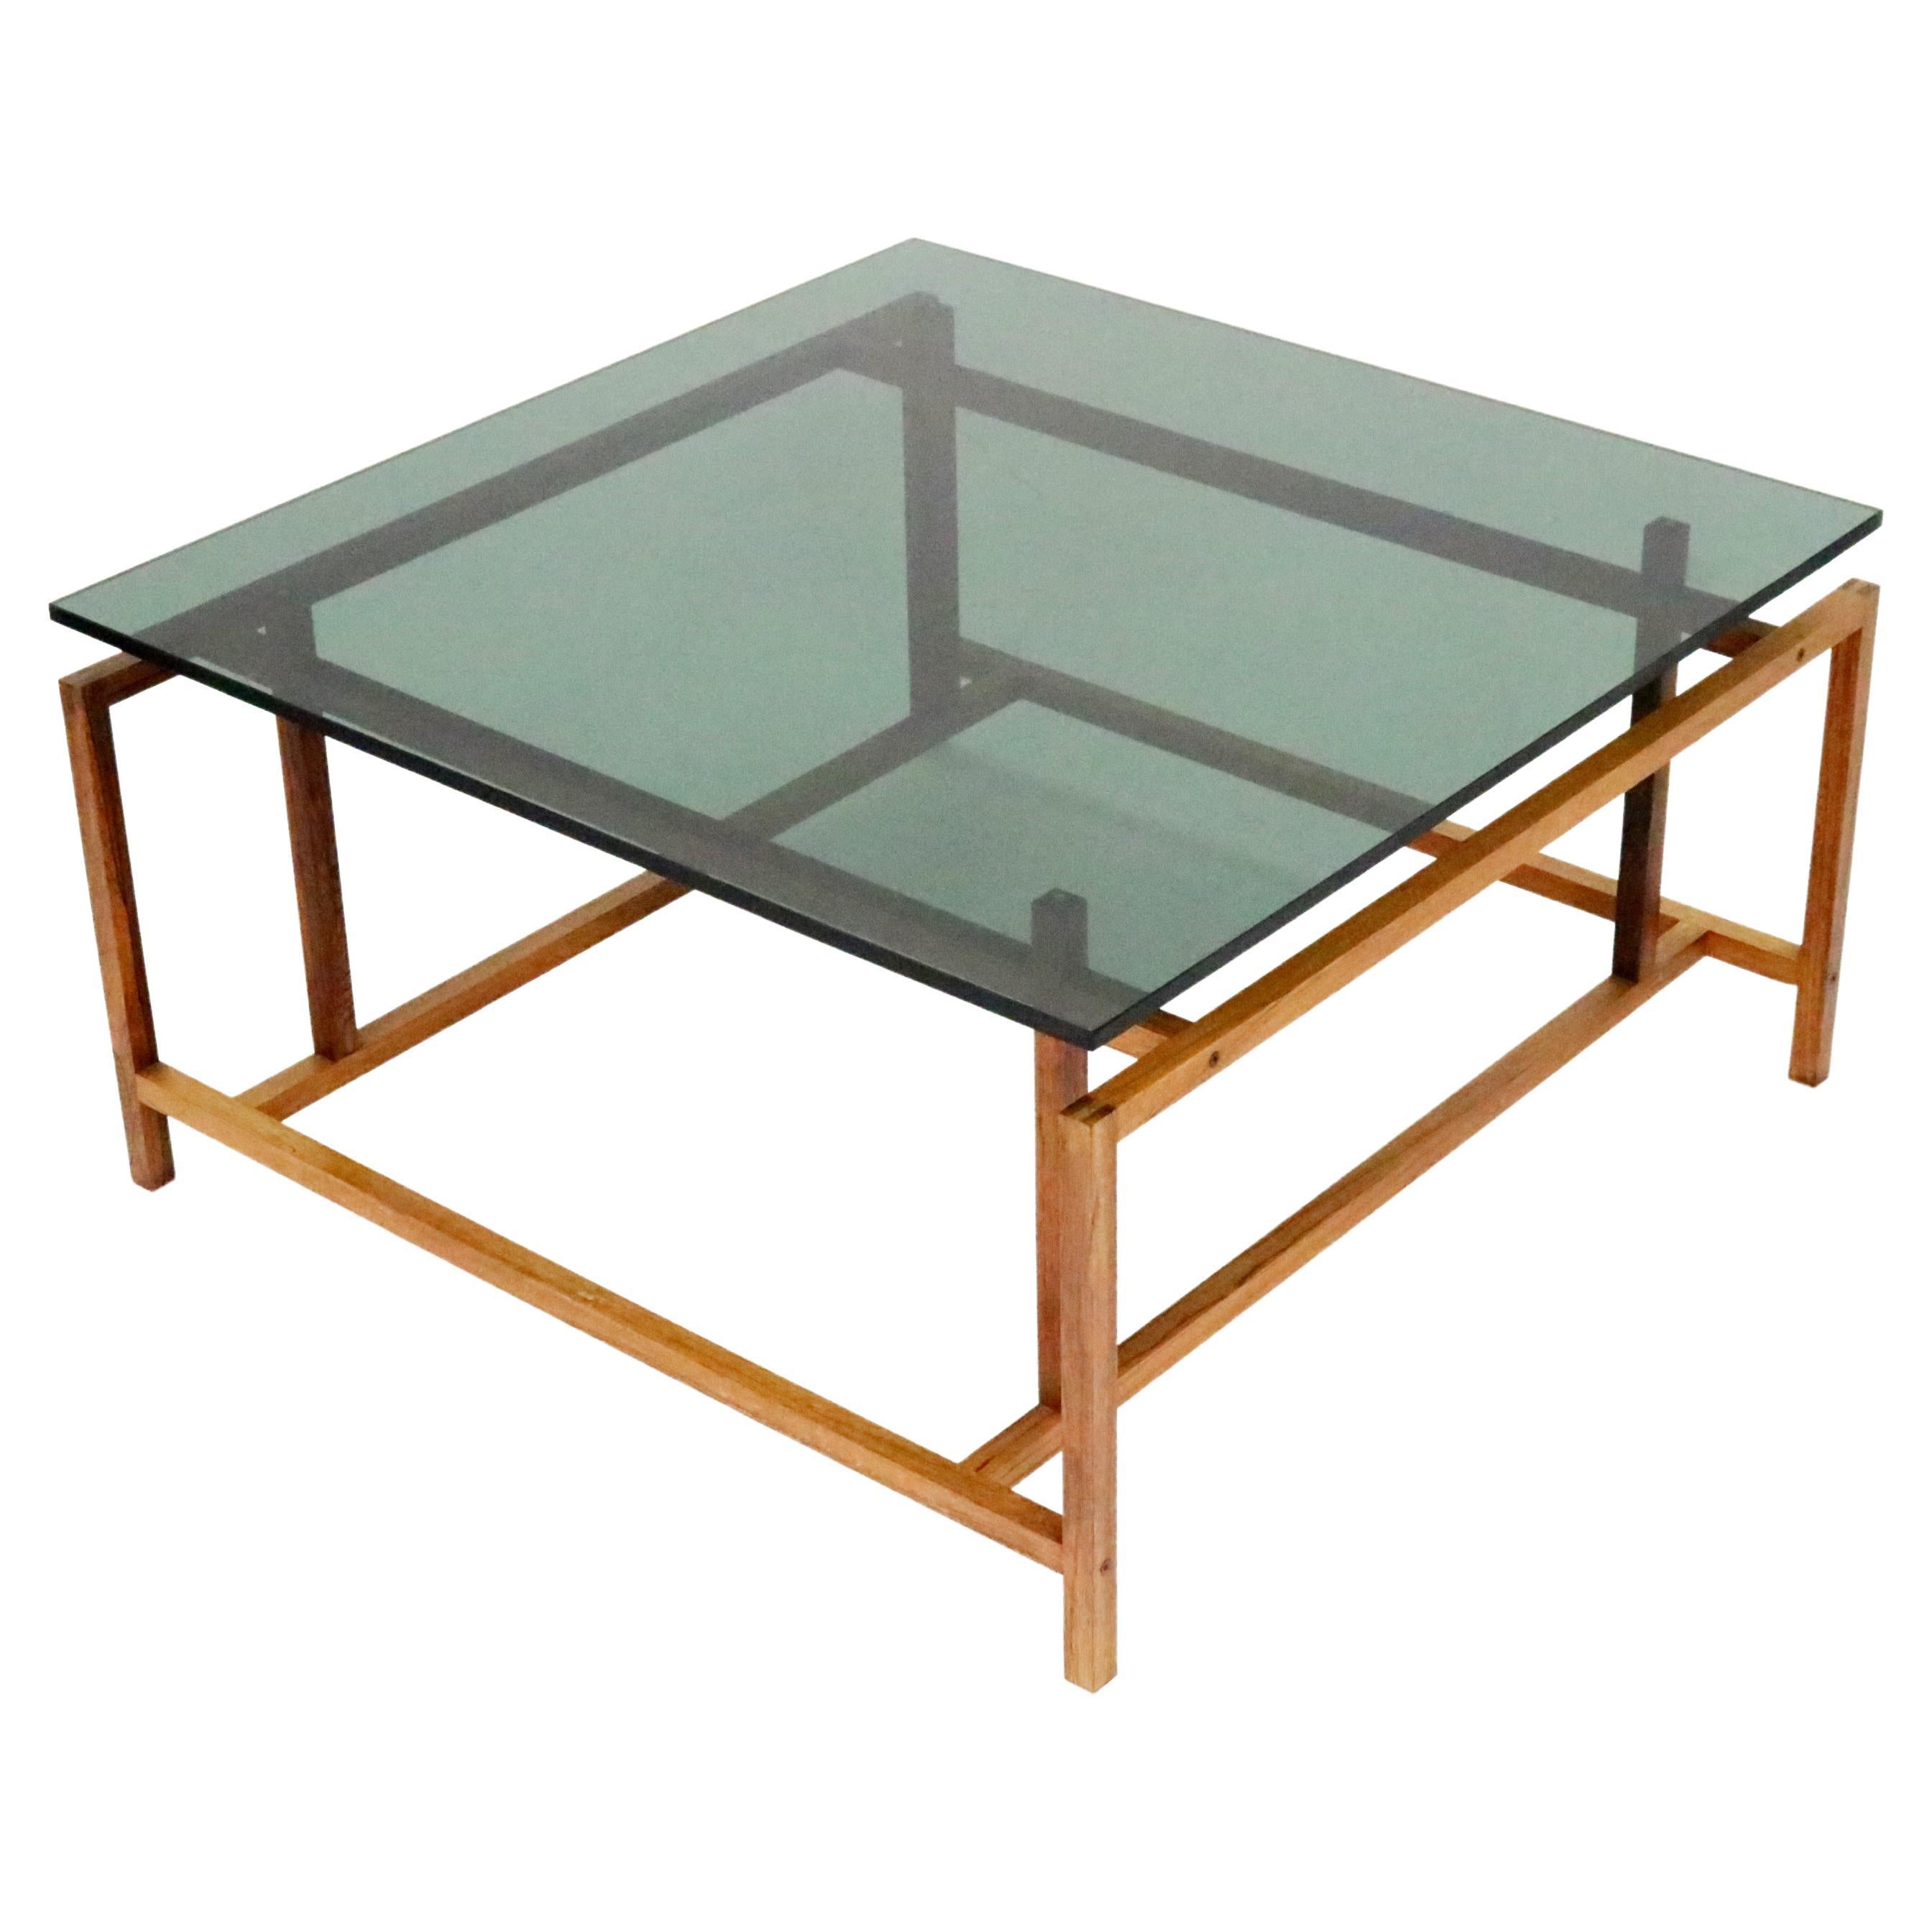 Henning Norgaard pour Komfort table basse en bois de rose et plateau en verre flottant